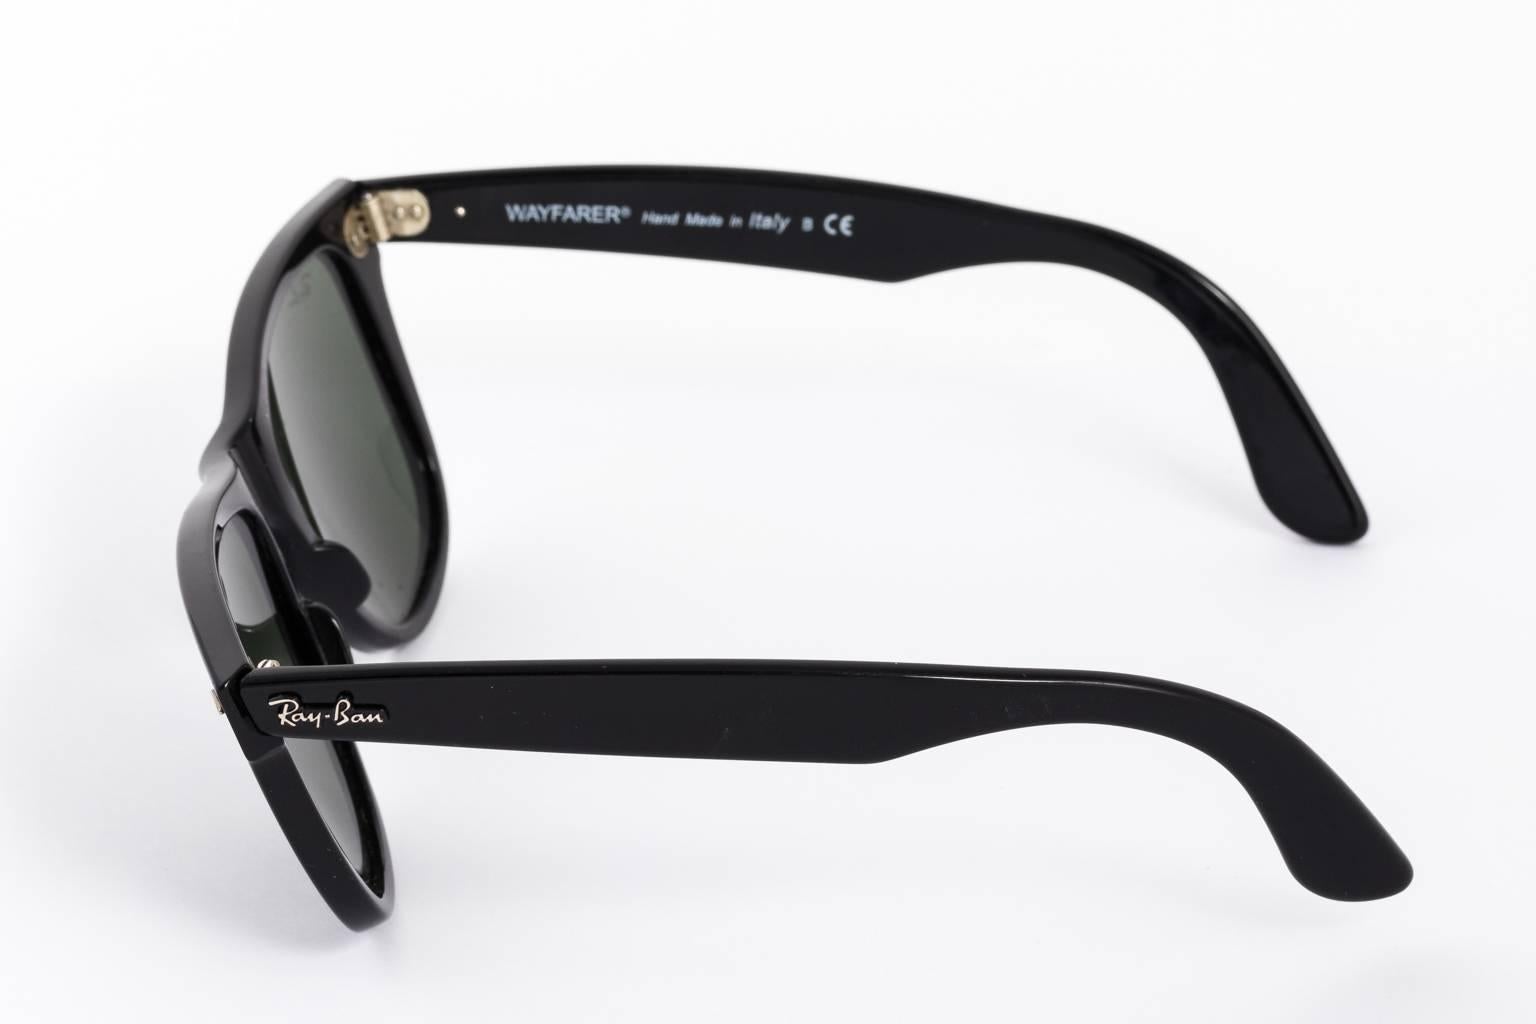  Black Ray-Ban sunglasses 3